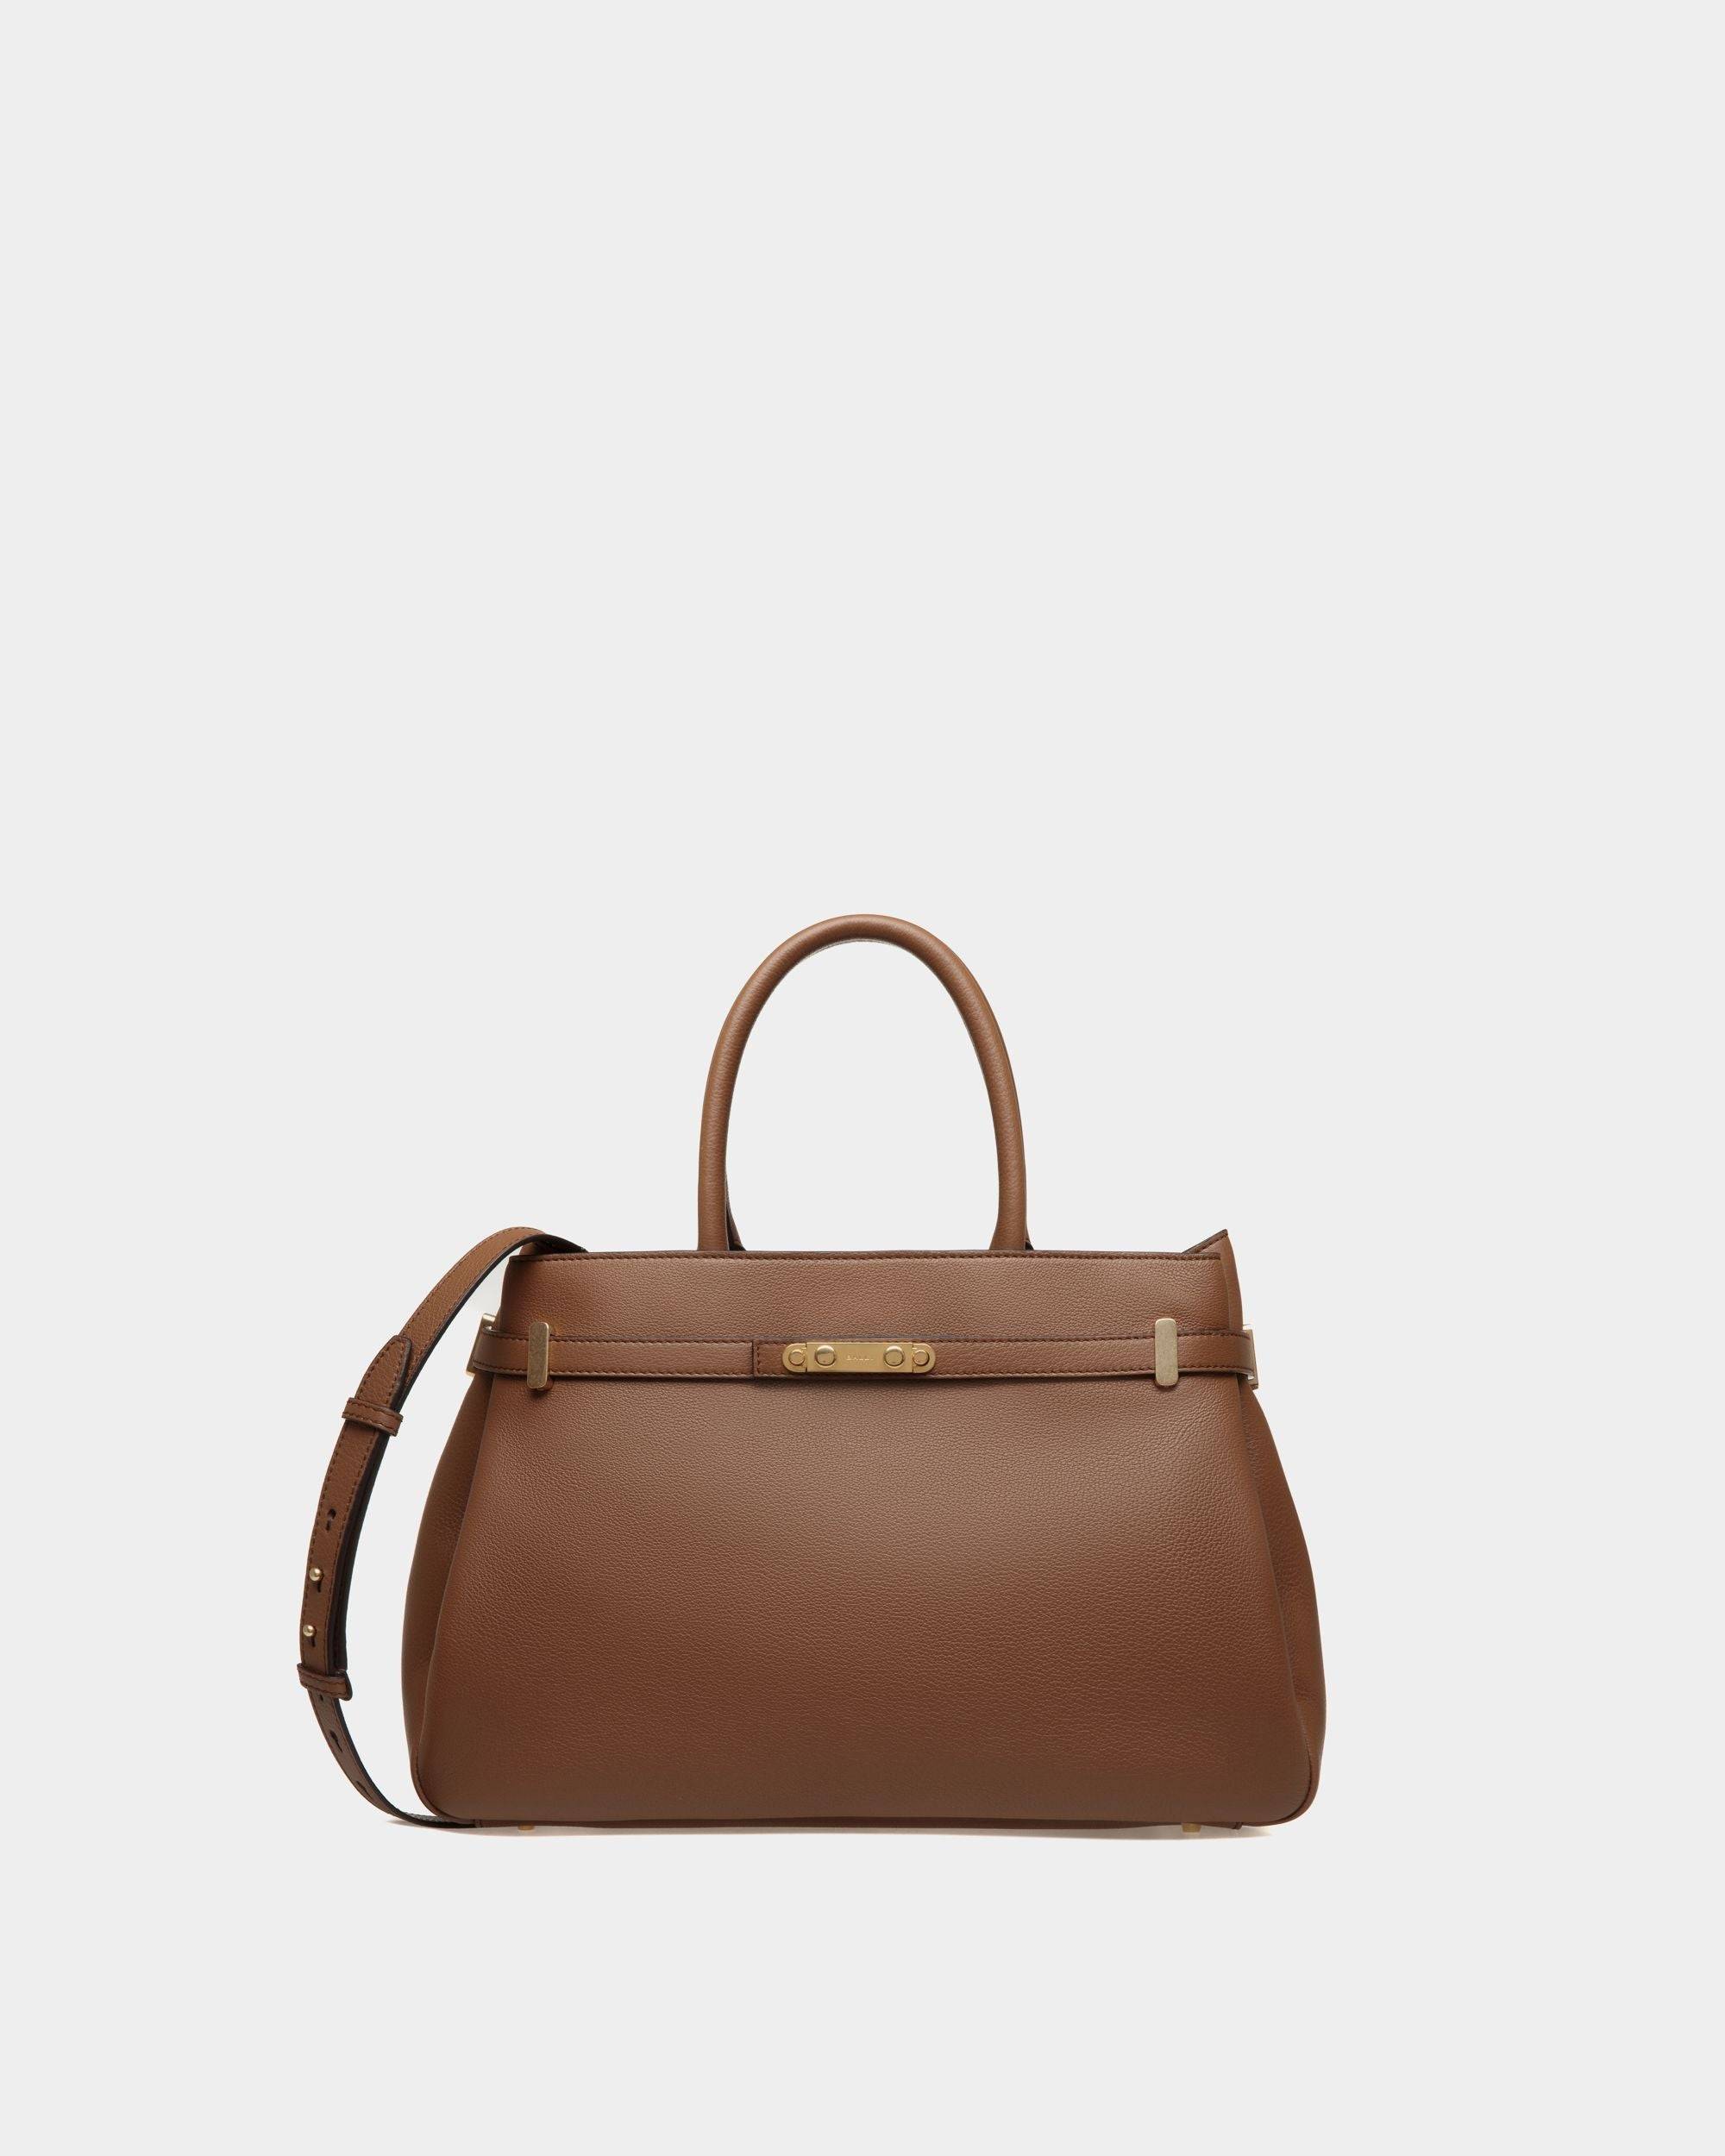 Inner Woman Bags Luxury Online Shopping Canada 2020 Purses Cross Body  Handbags women bags brands luxury designer bags - AliExpress